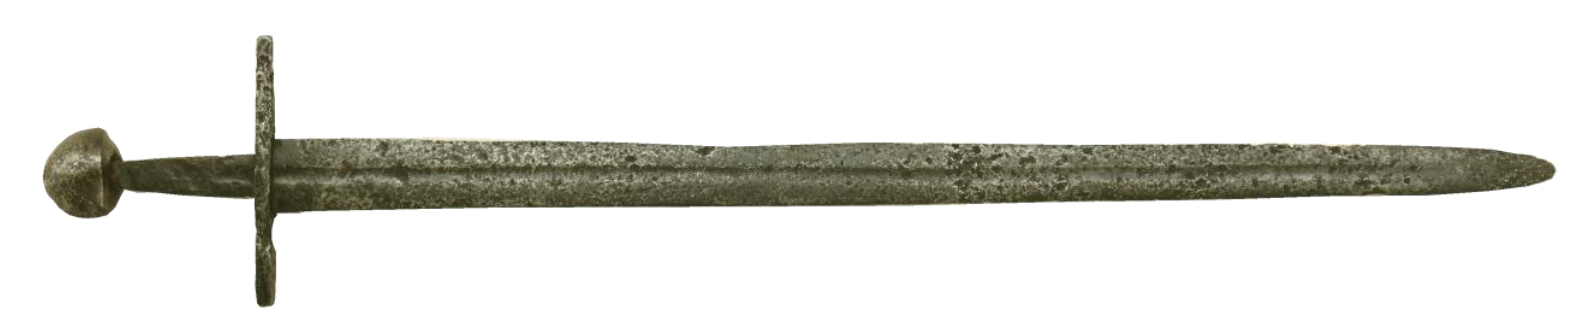 Espada de Cruz HispanoCristiana (siglo XII-XIII)